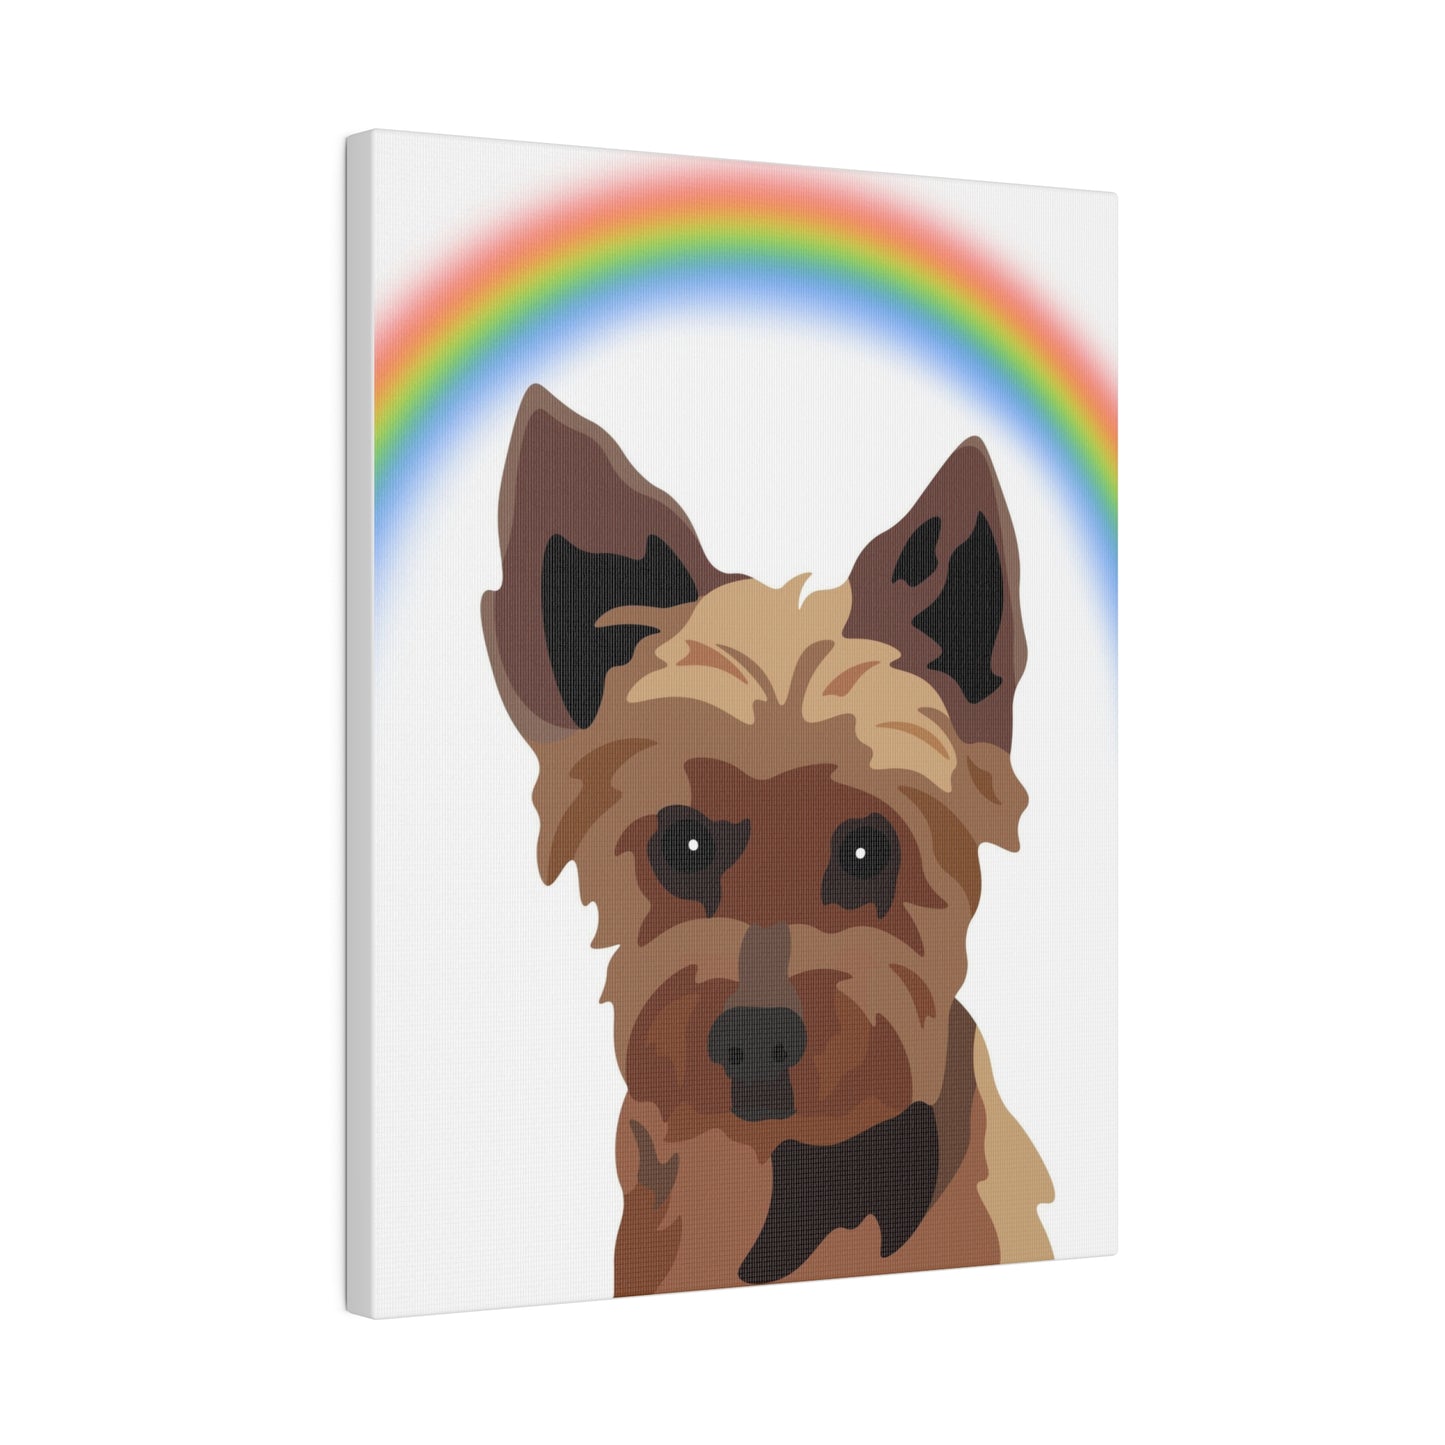 One Pet Portrait on Canvas | Rainbow Bridge Background | Custom Hand-Drawn Pet Portrait in Cartoon-Realism Style